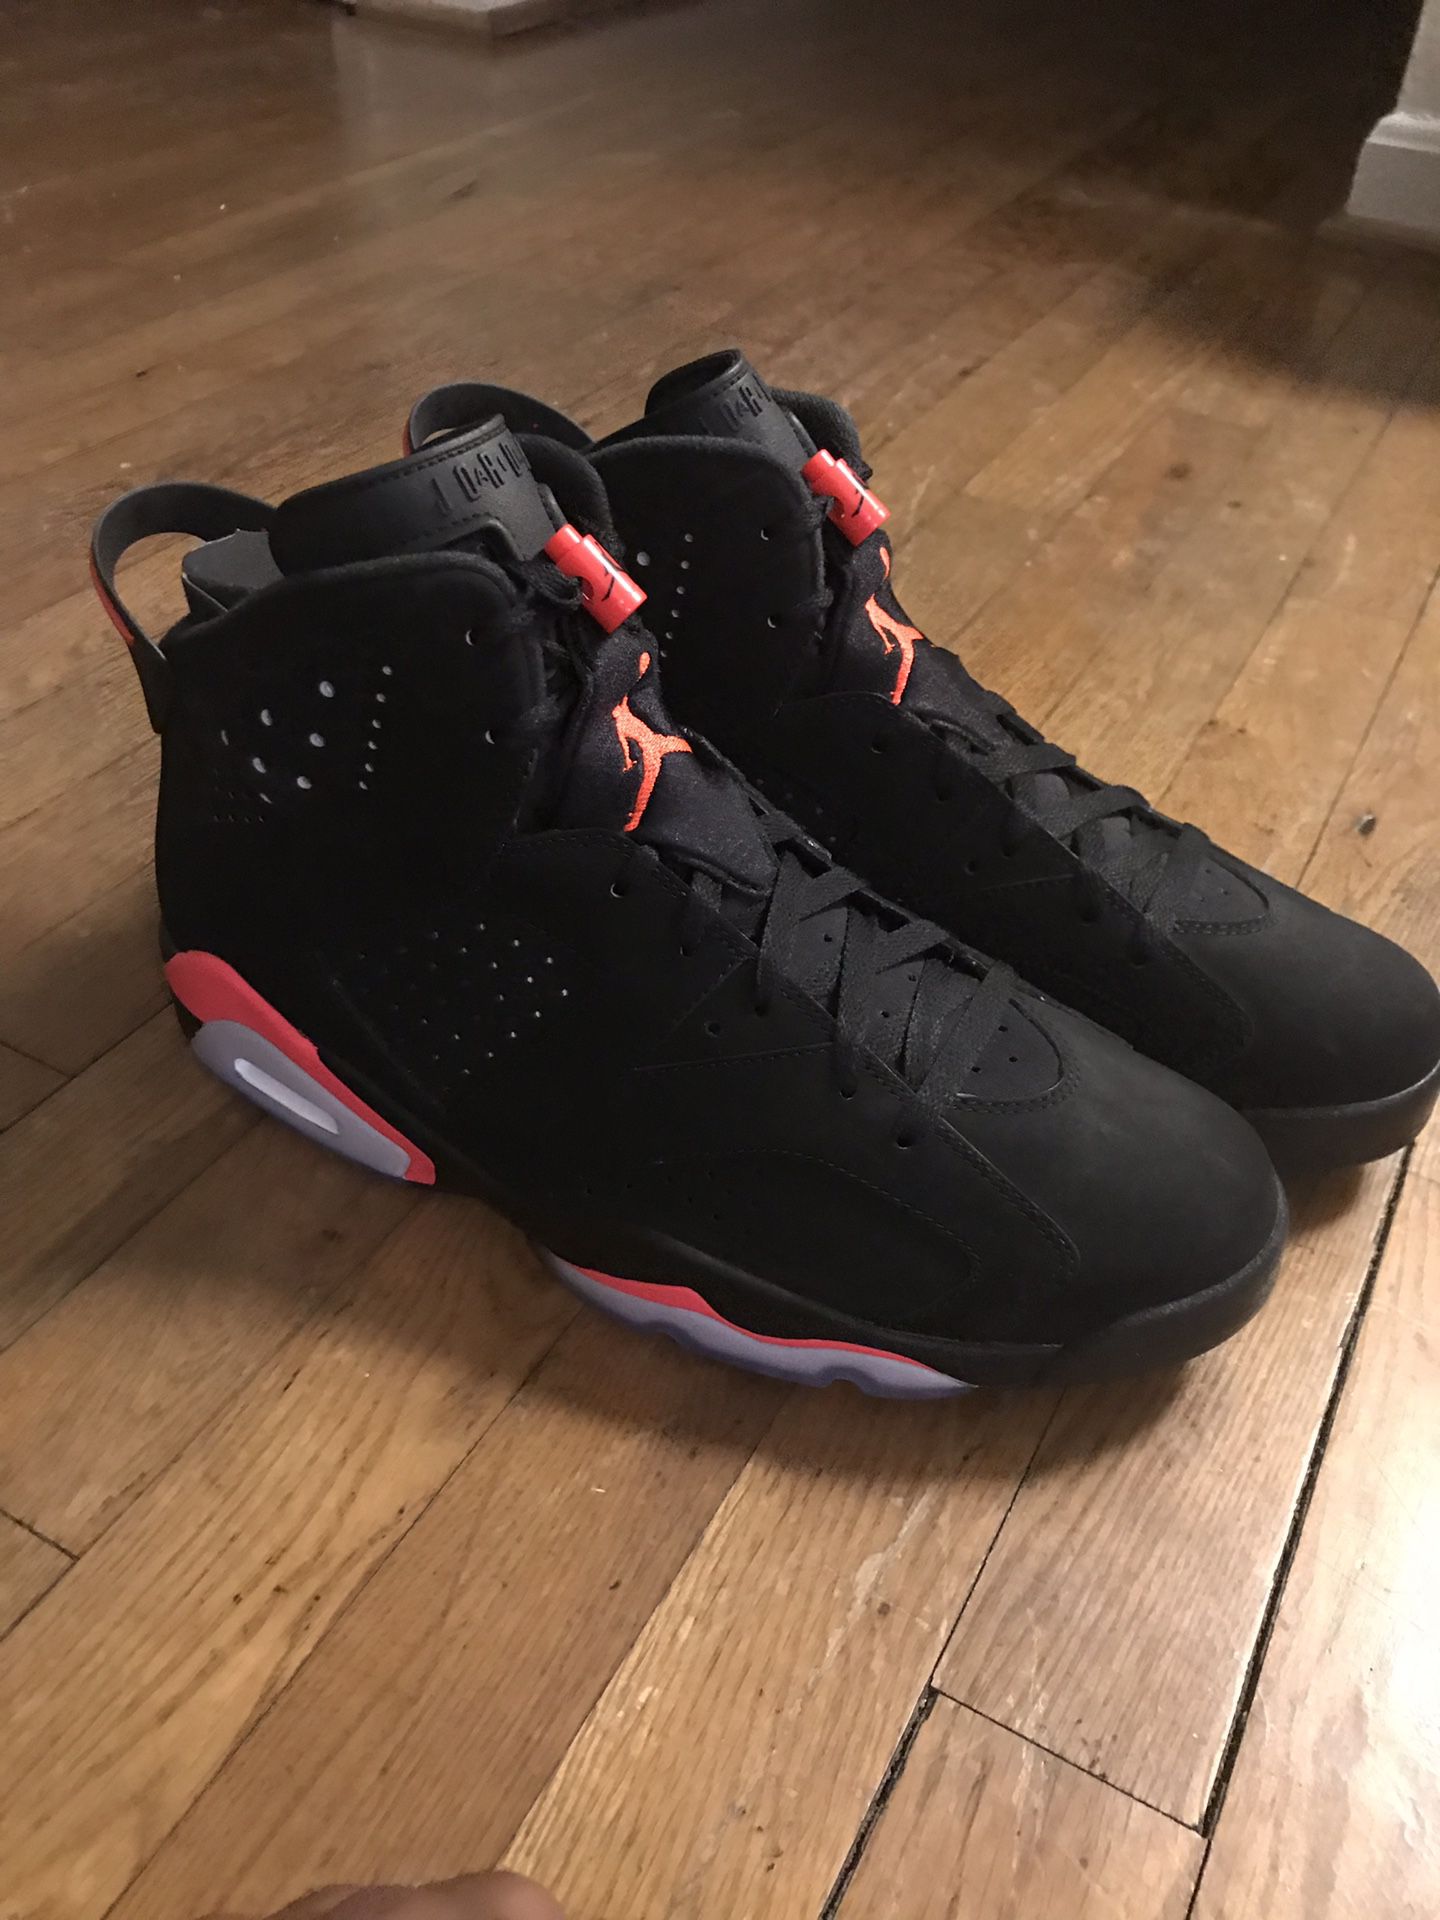 DS pair of 2014 Jordan 6 Infrared (Size 13)